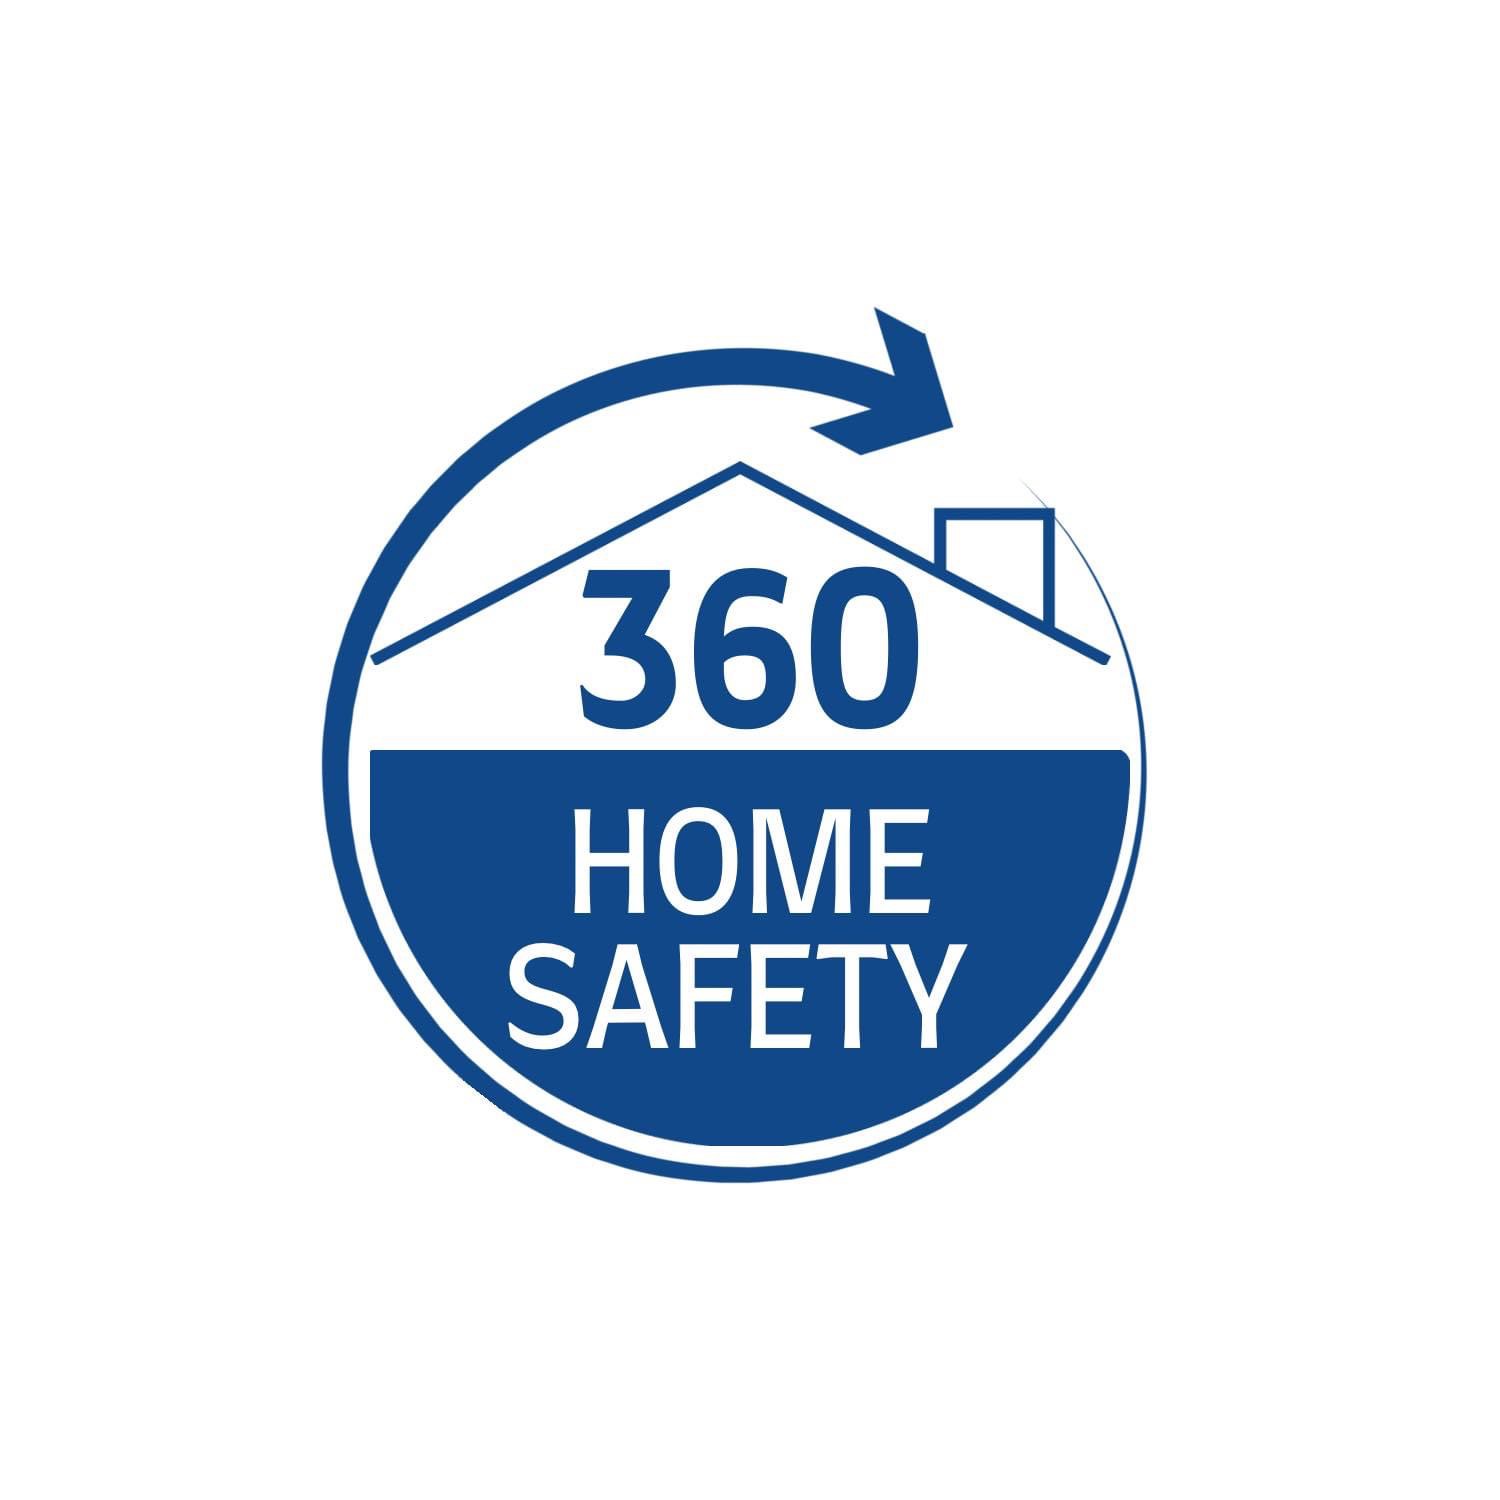 360 Home Safety, LLC